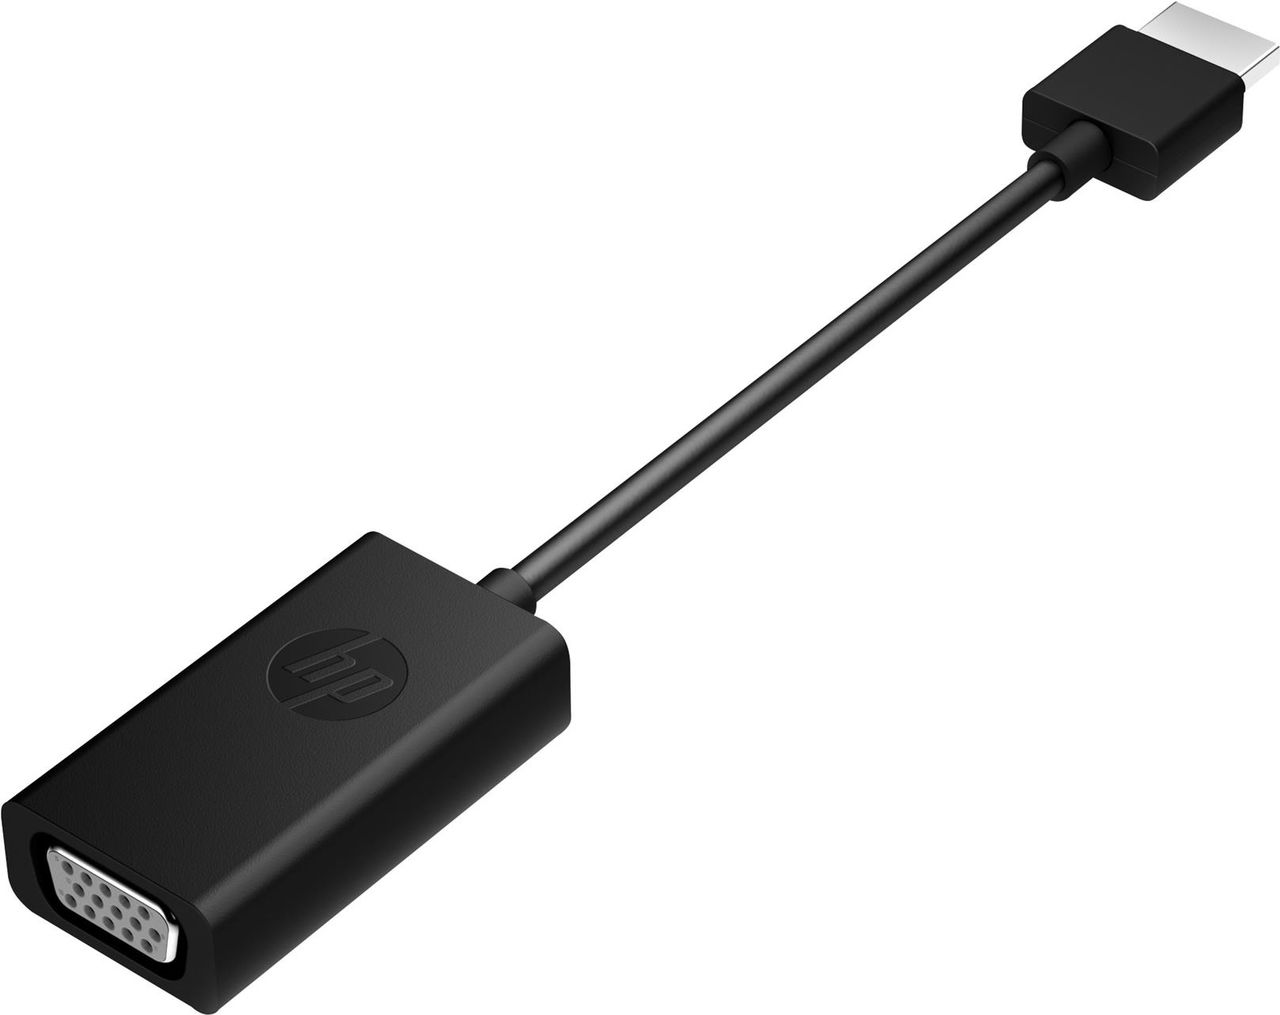 HP HDMI to VGA Display Adapter - Videoanschlu� - HDMI / VGA - HD-15 (W) bis HDMI (M) - 17.3 cm von HP Inc